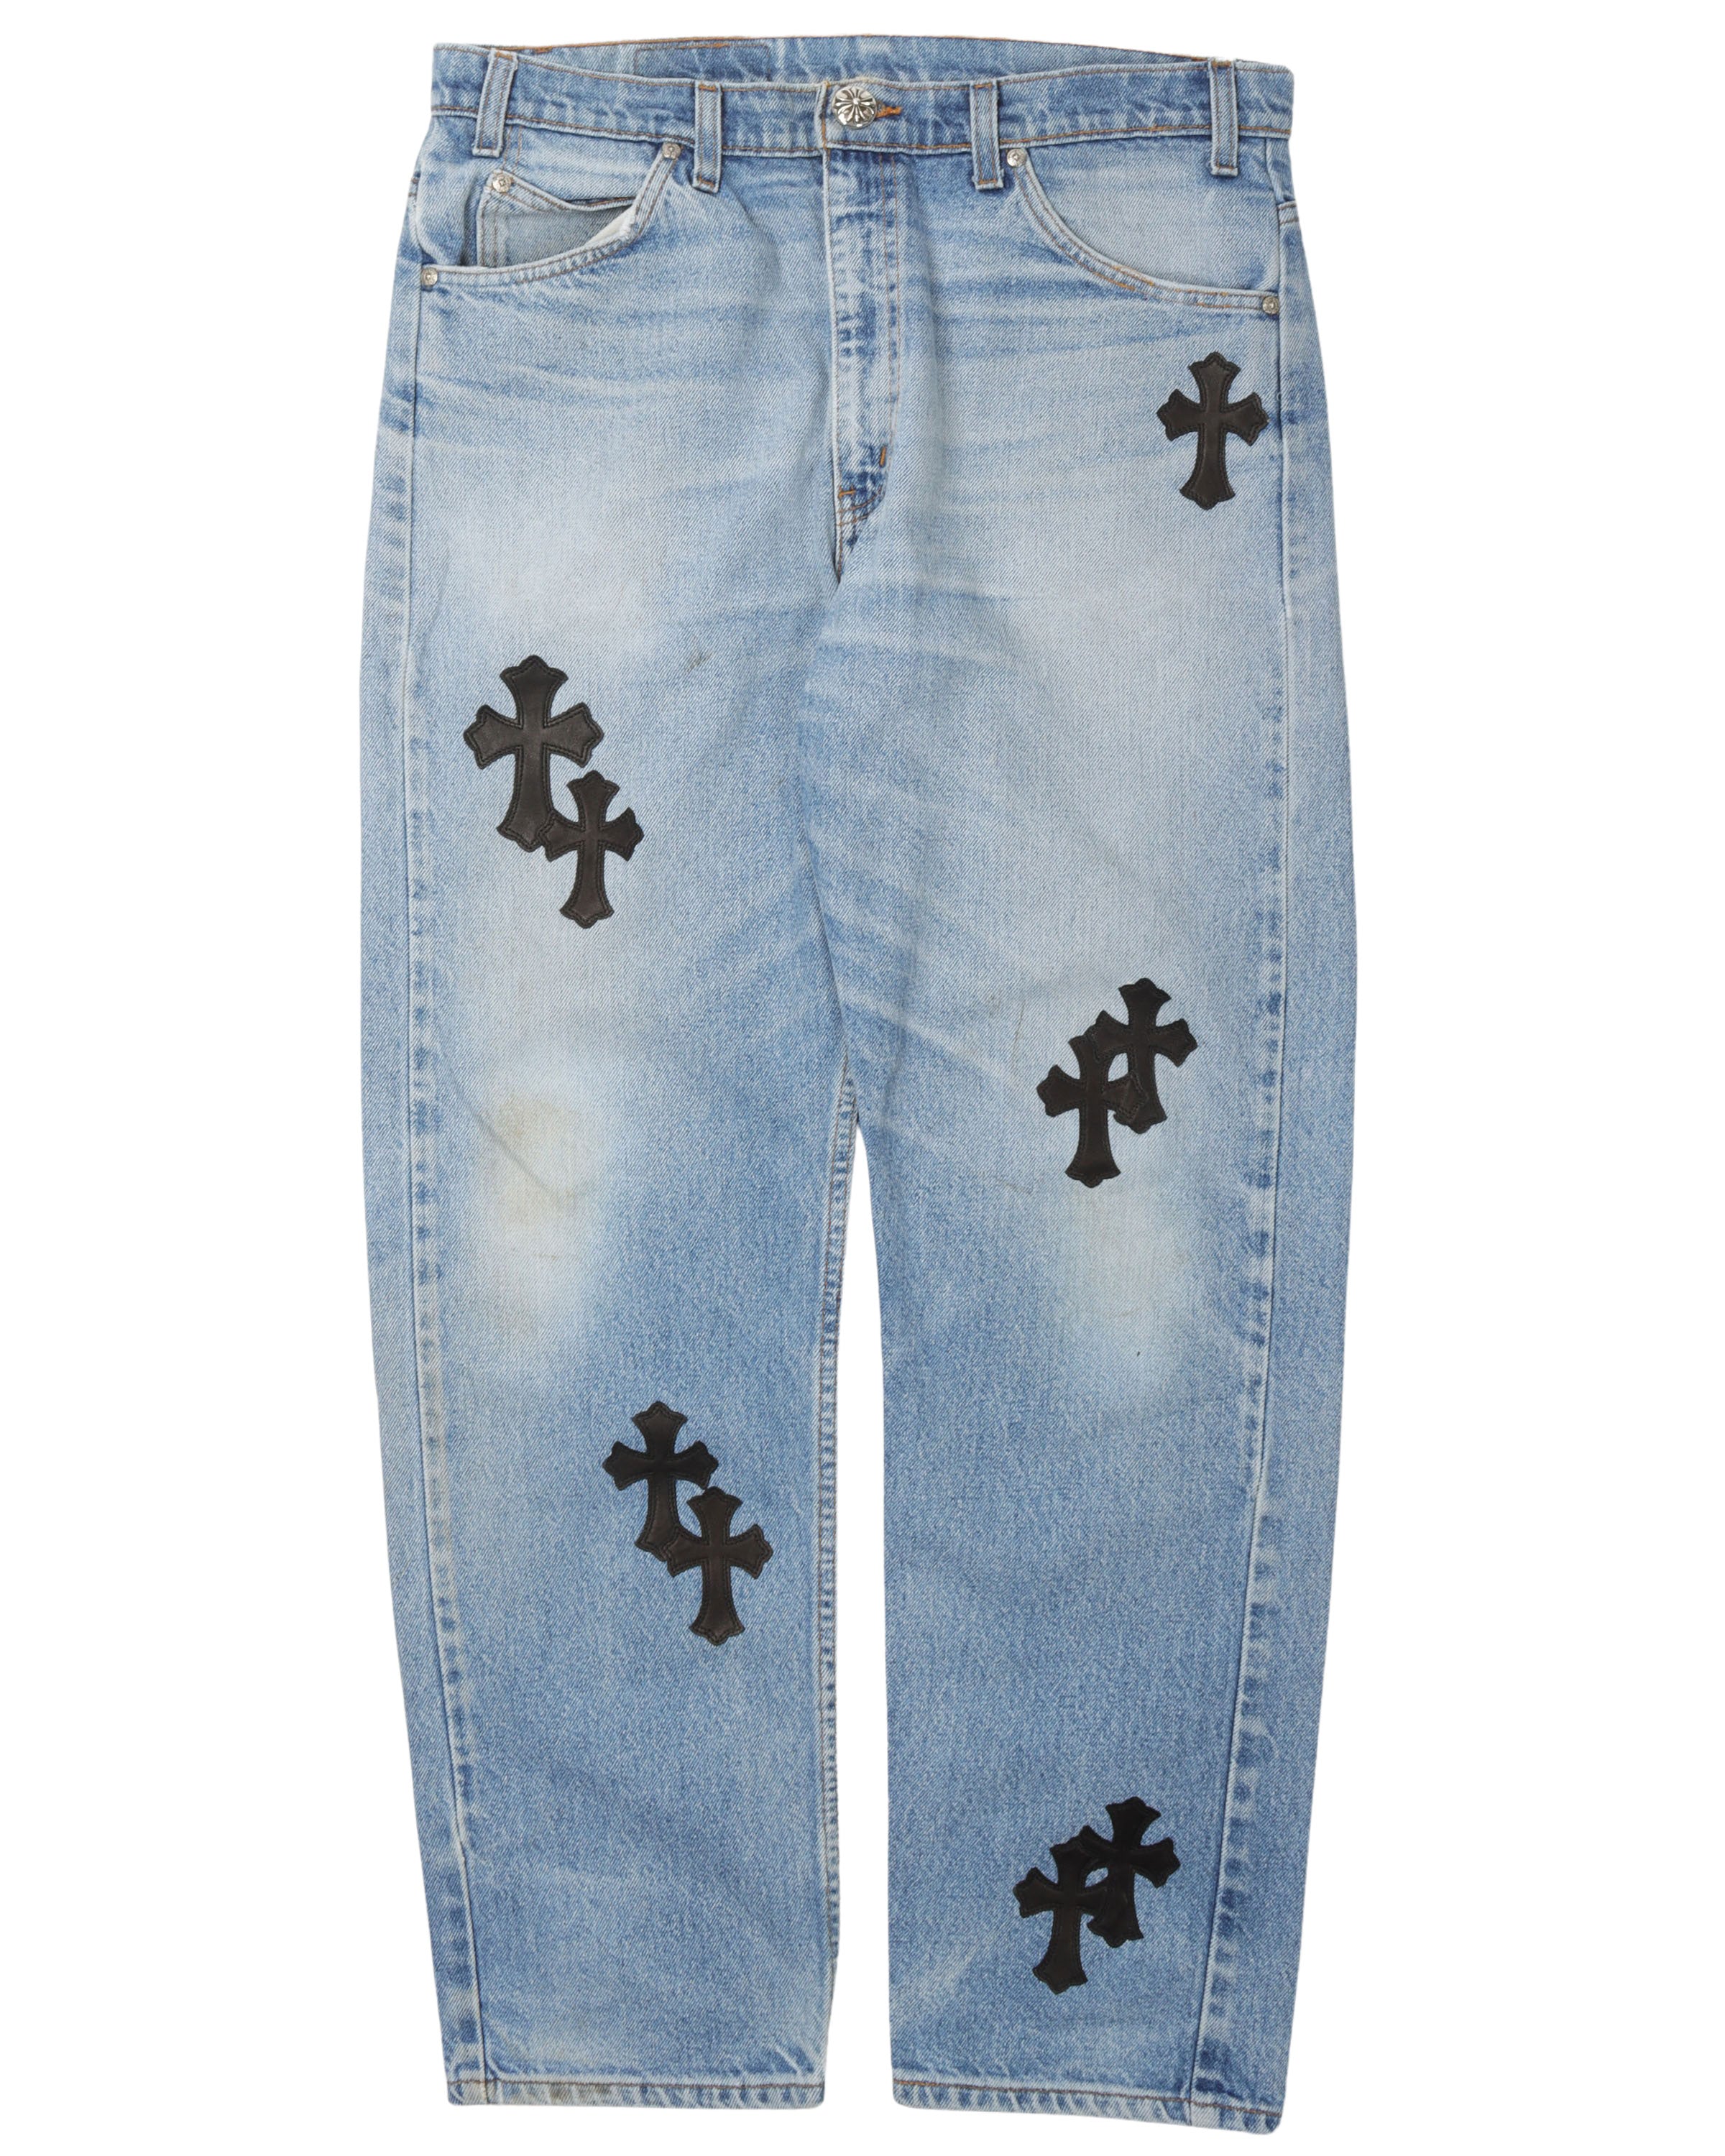 Chrome Hearts Levi's Cross Patch Jeans